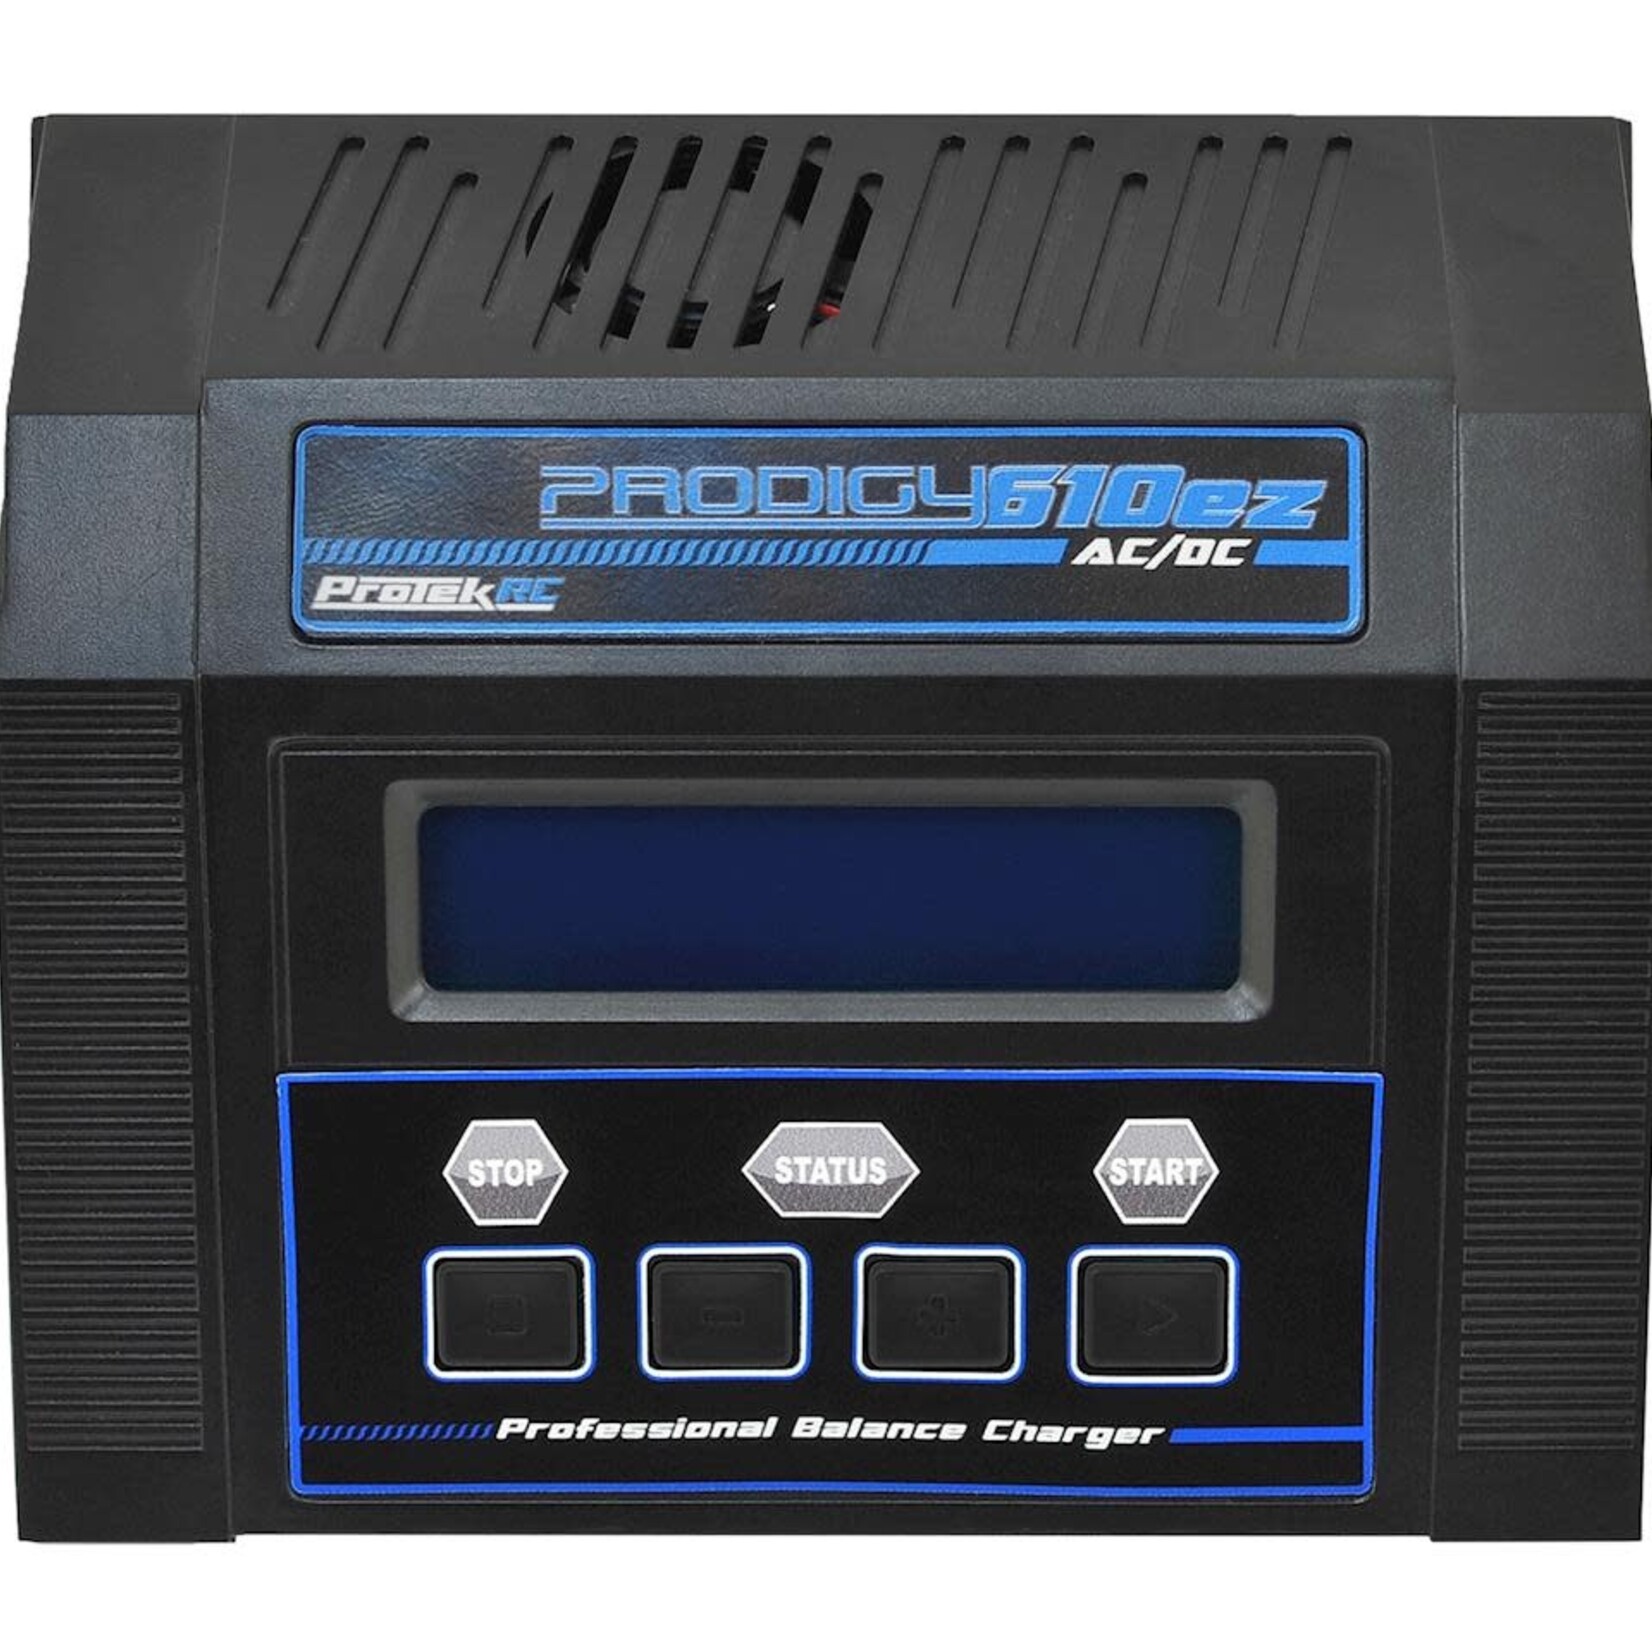 ProTek RC ProTek RC 8522 "Prodigy 610ez AC/DC" LiHV/LiPo Balance Battery Charger